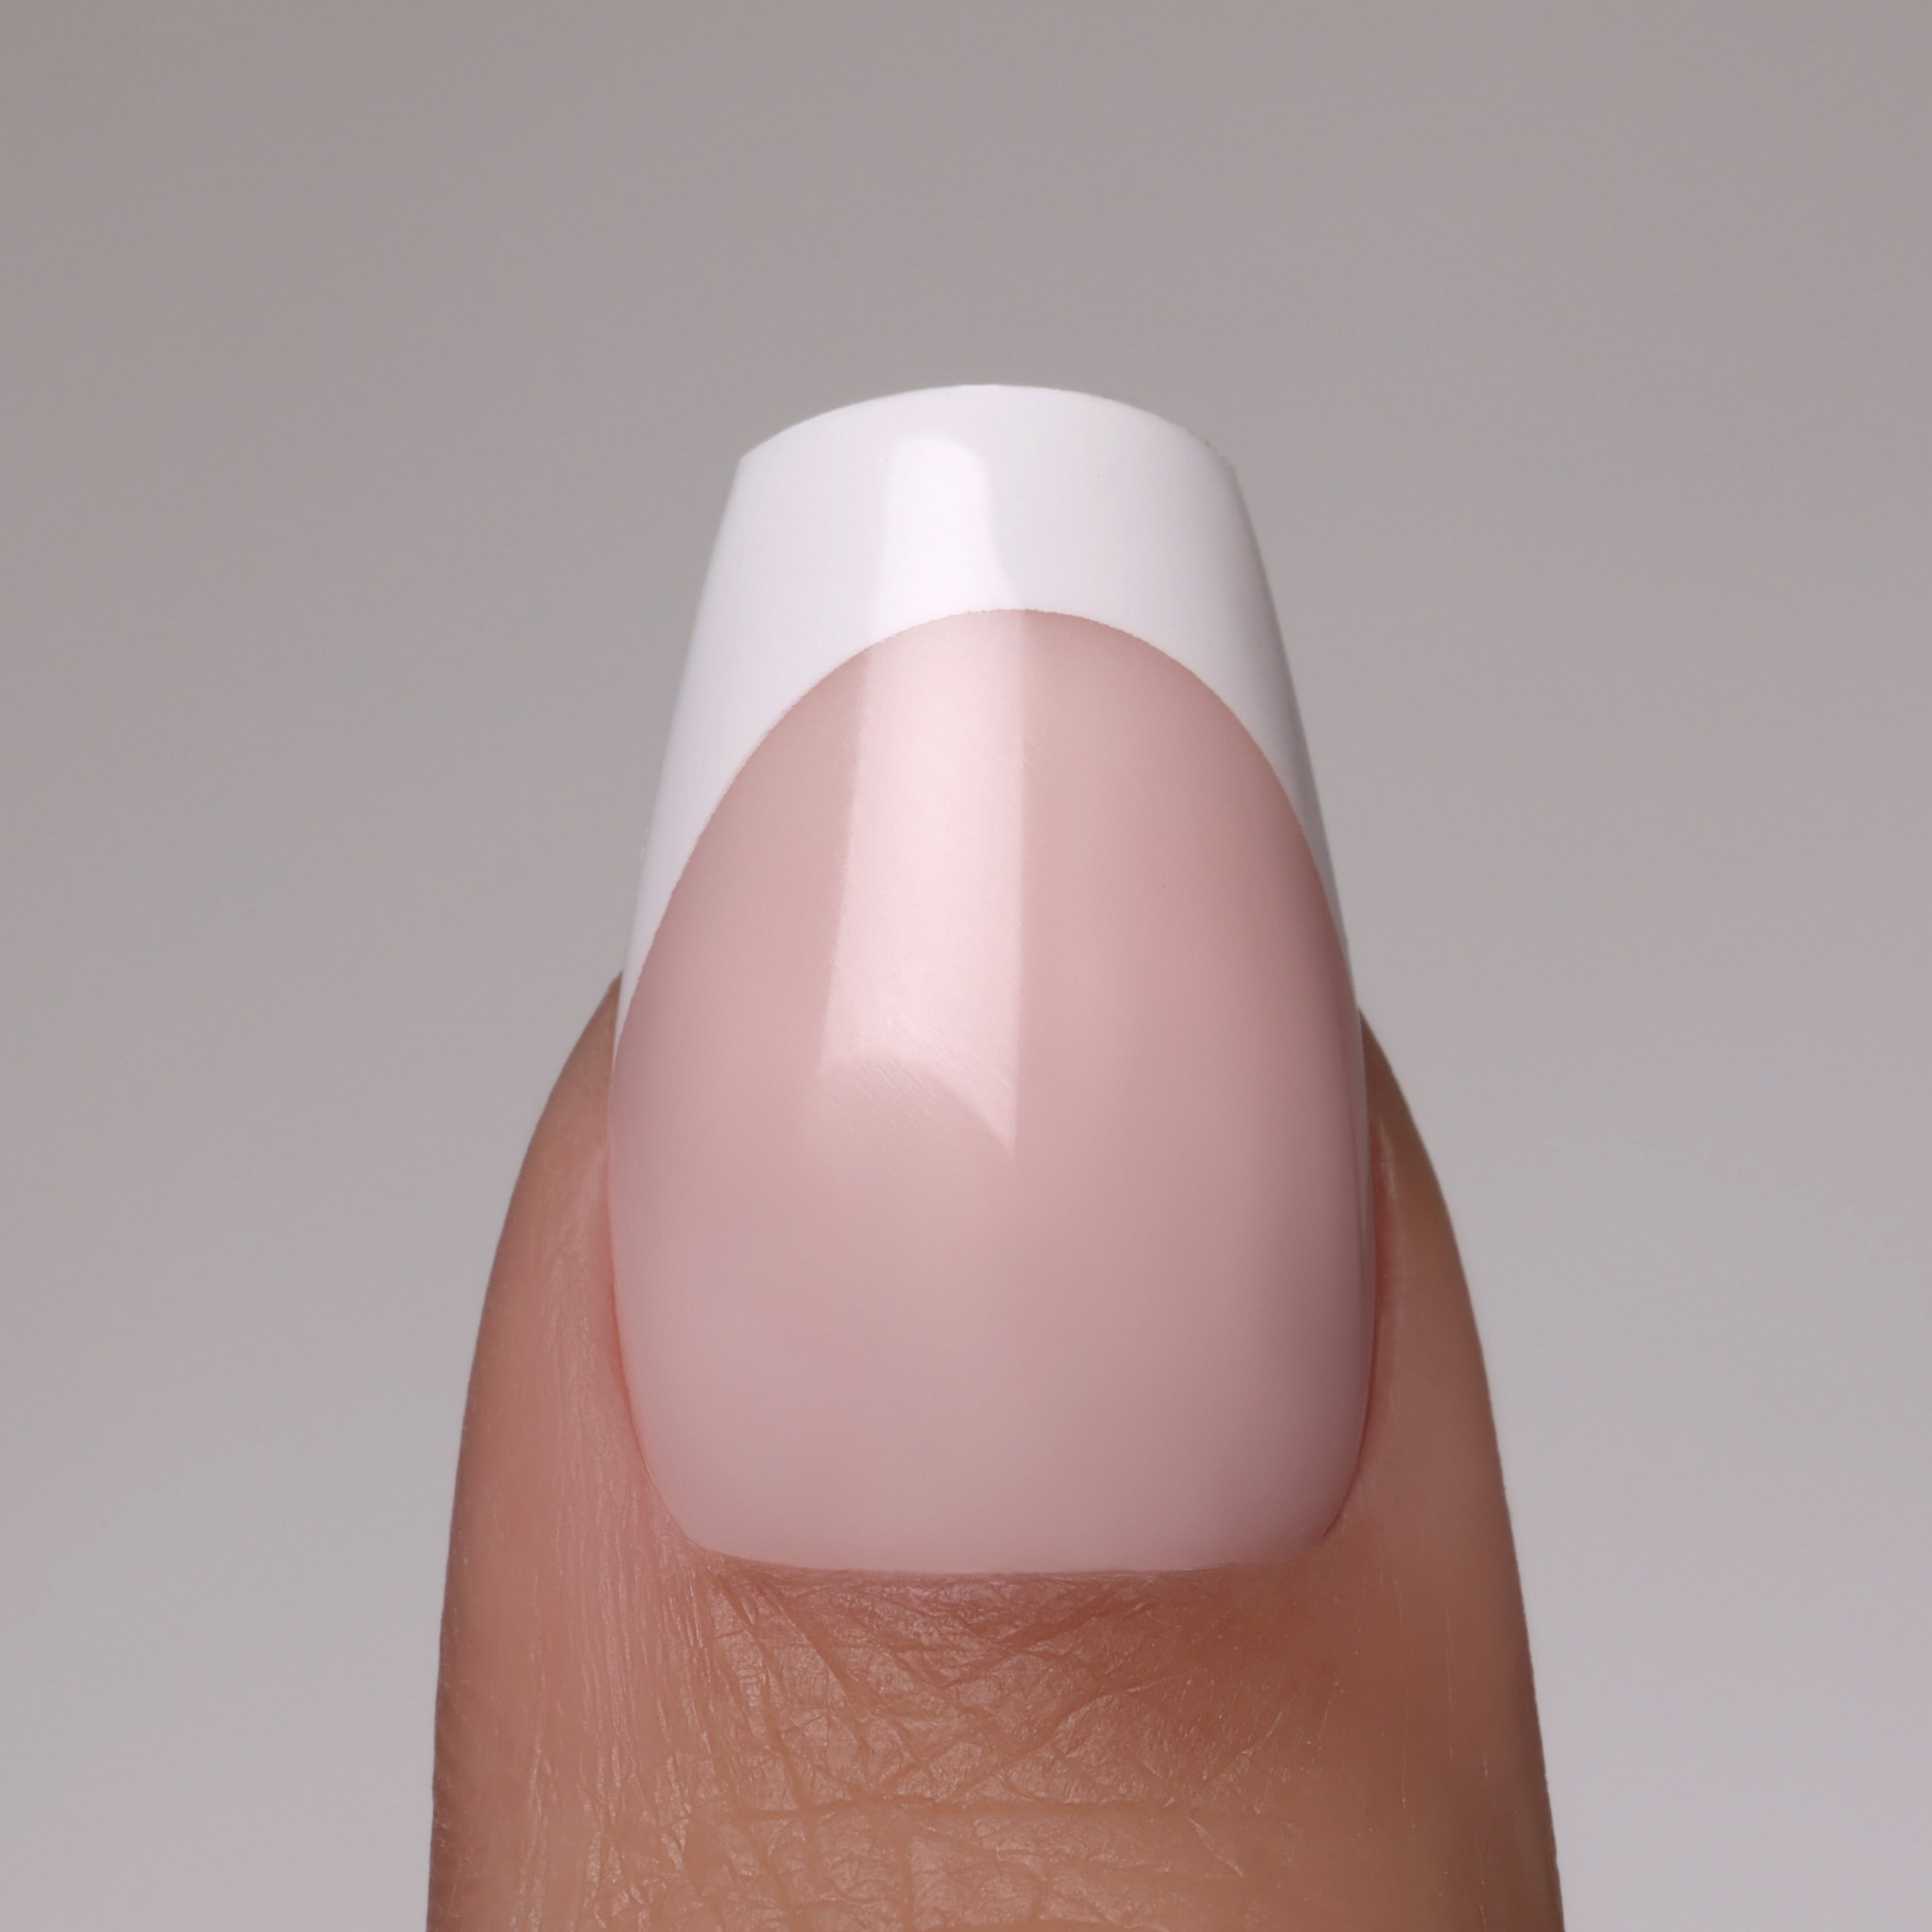 SIENA ROSE ACRYLISH (long) artificial nails